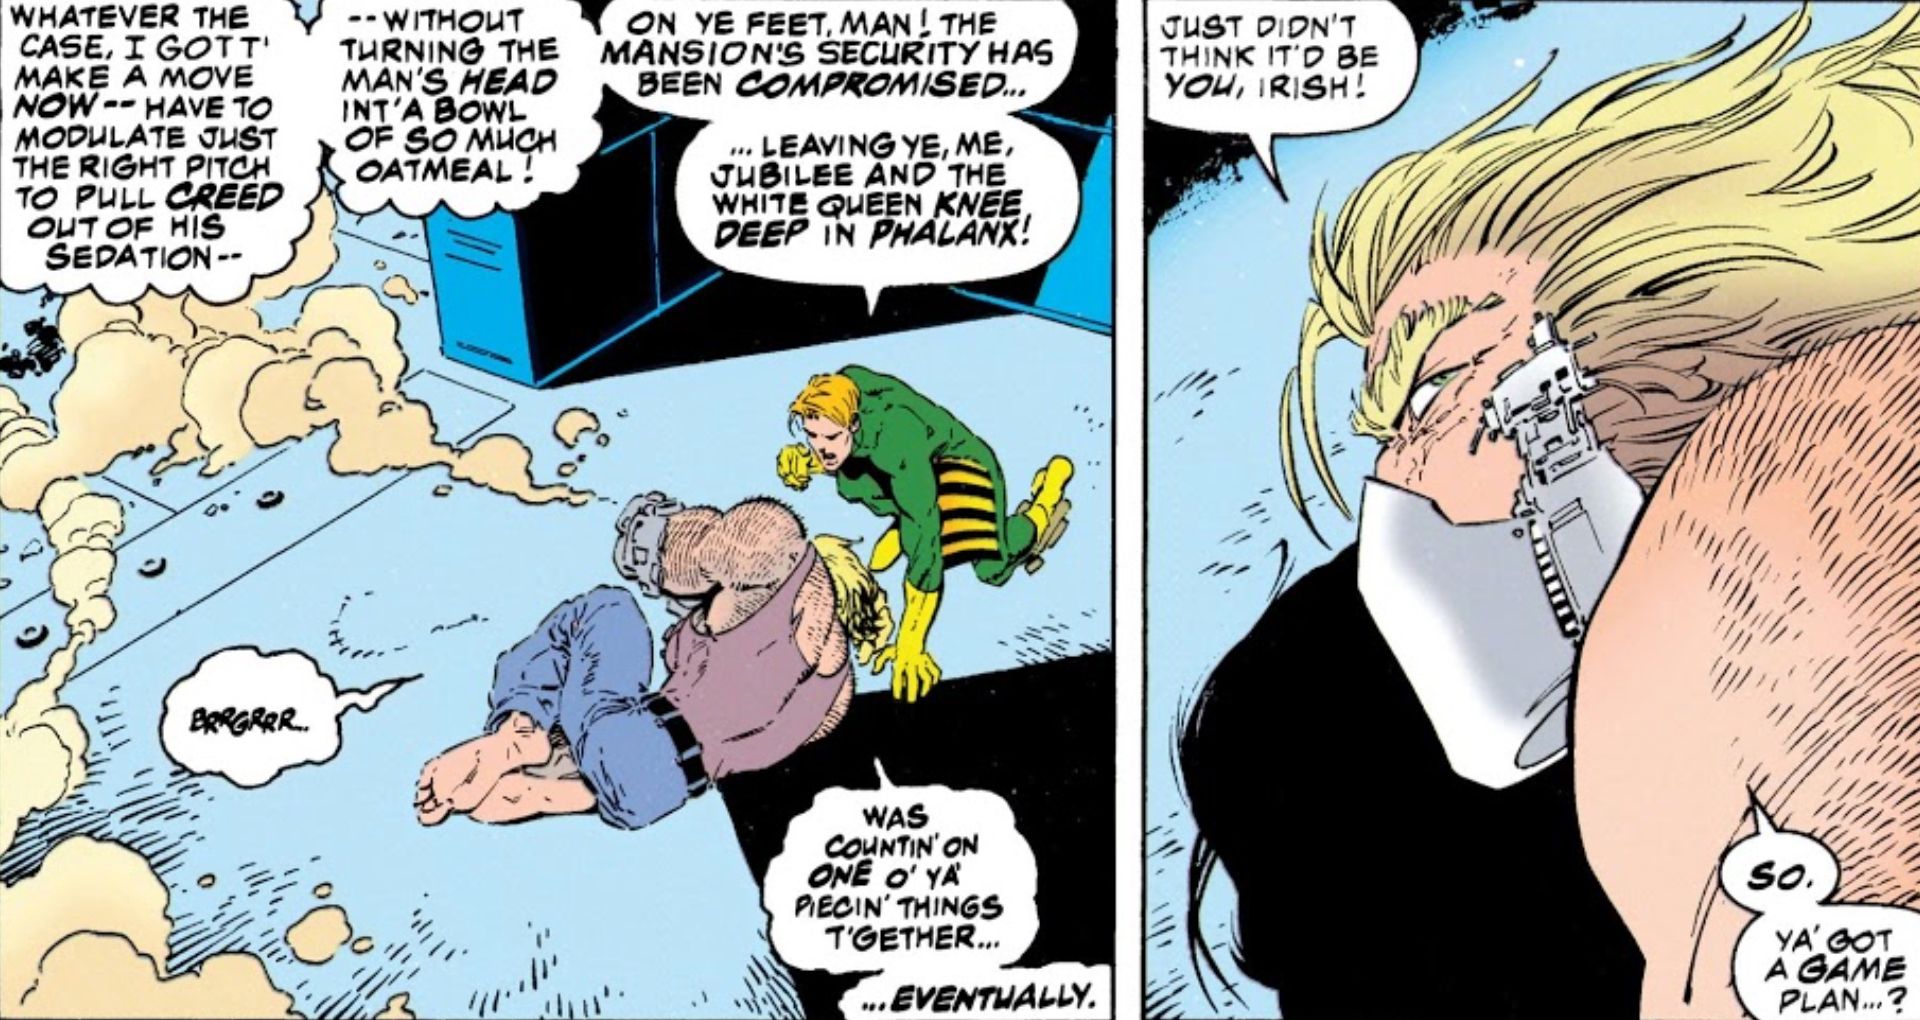 Sabretooth in Uncanny X-Men Issue 316